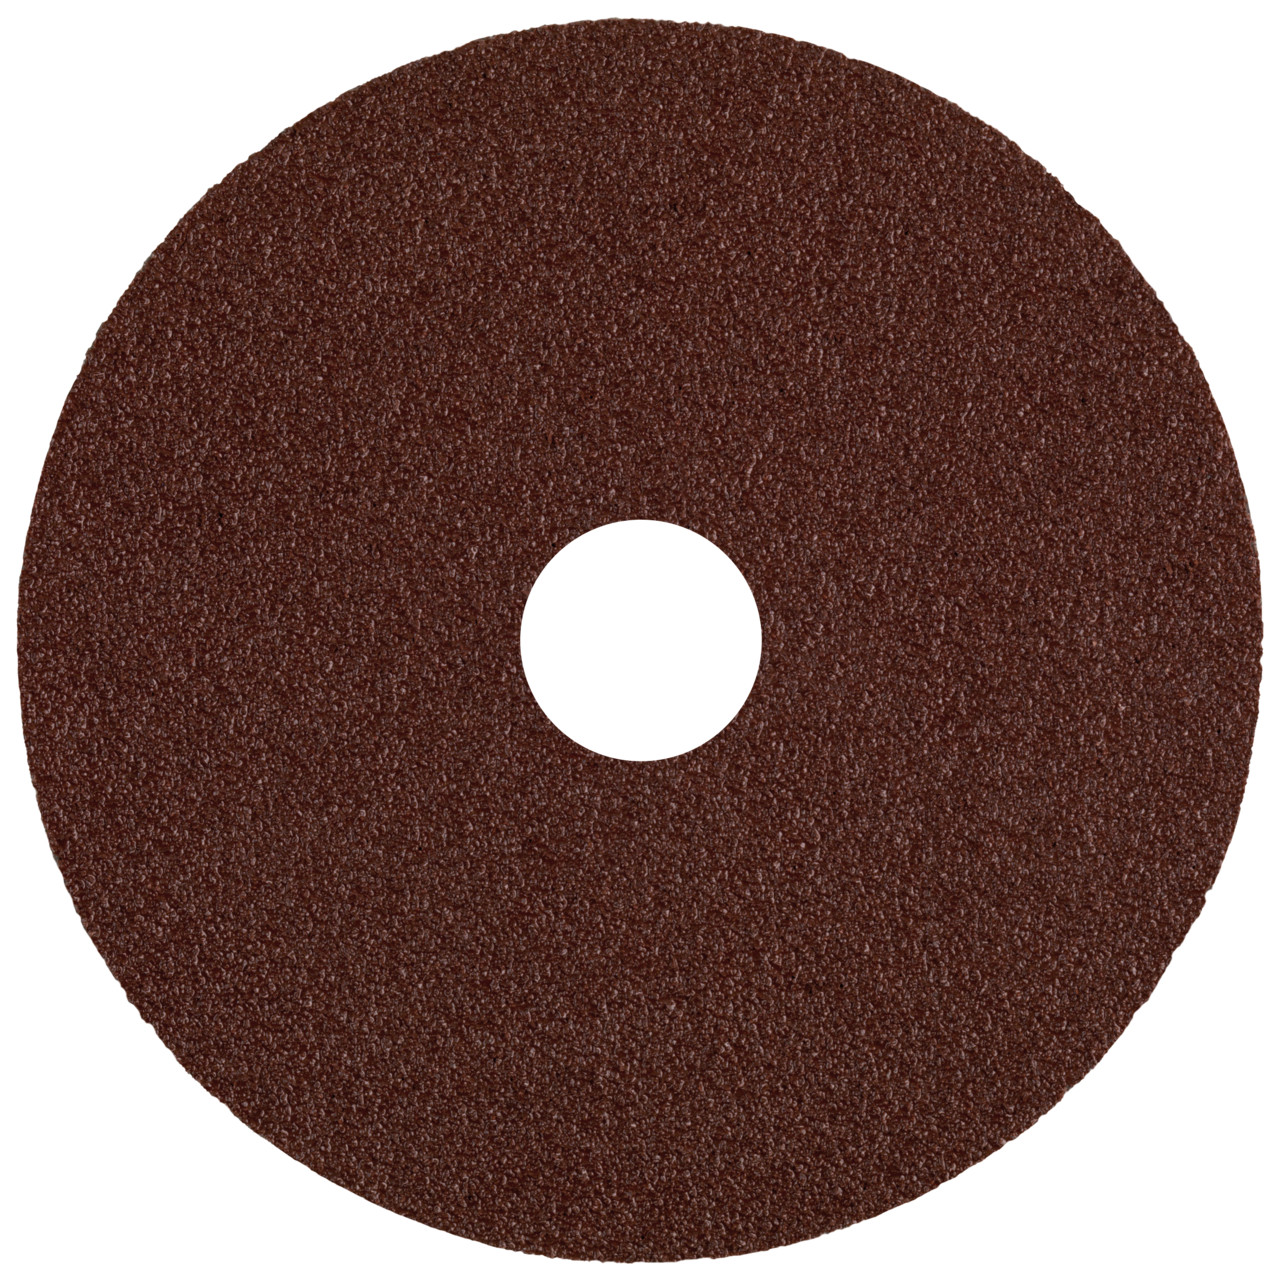 Tyrolit A-B02 V Vulcanised fibre disc DxH 115x22 For steel, non-ferrous metals and wood, P40, shape: DISC, Art. 34286493